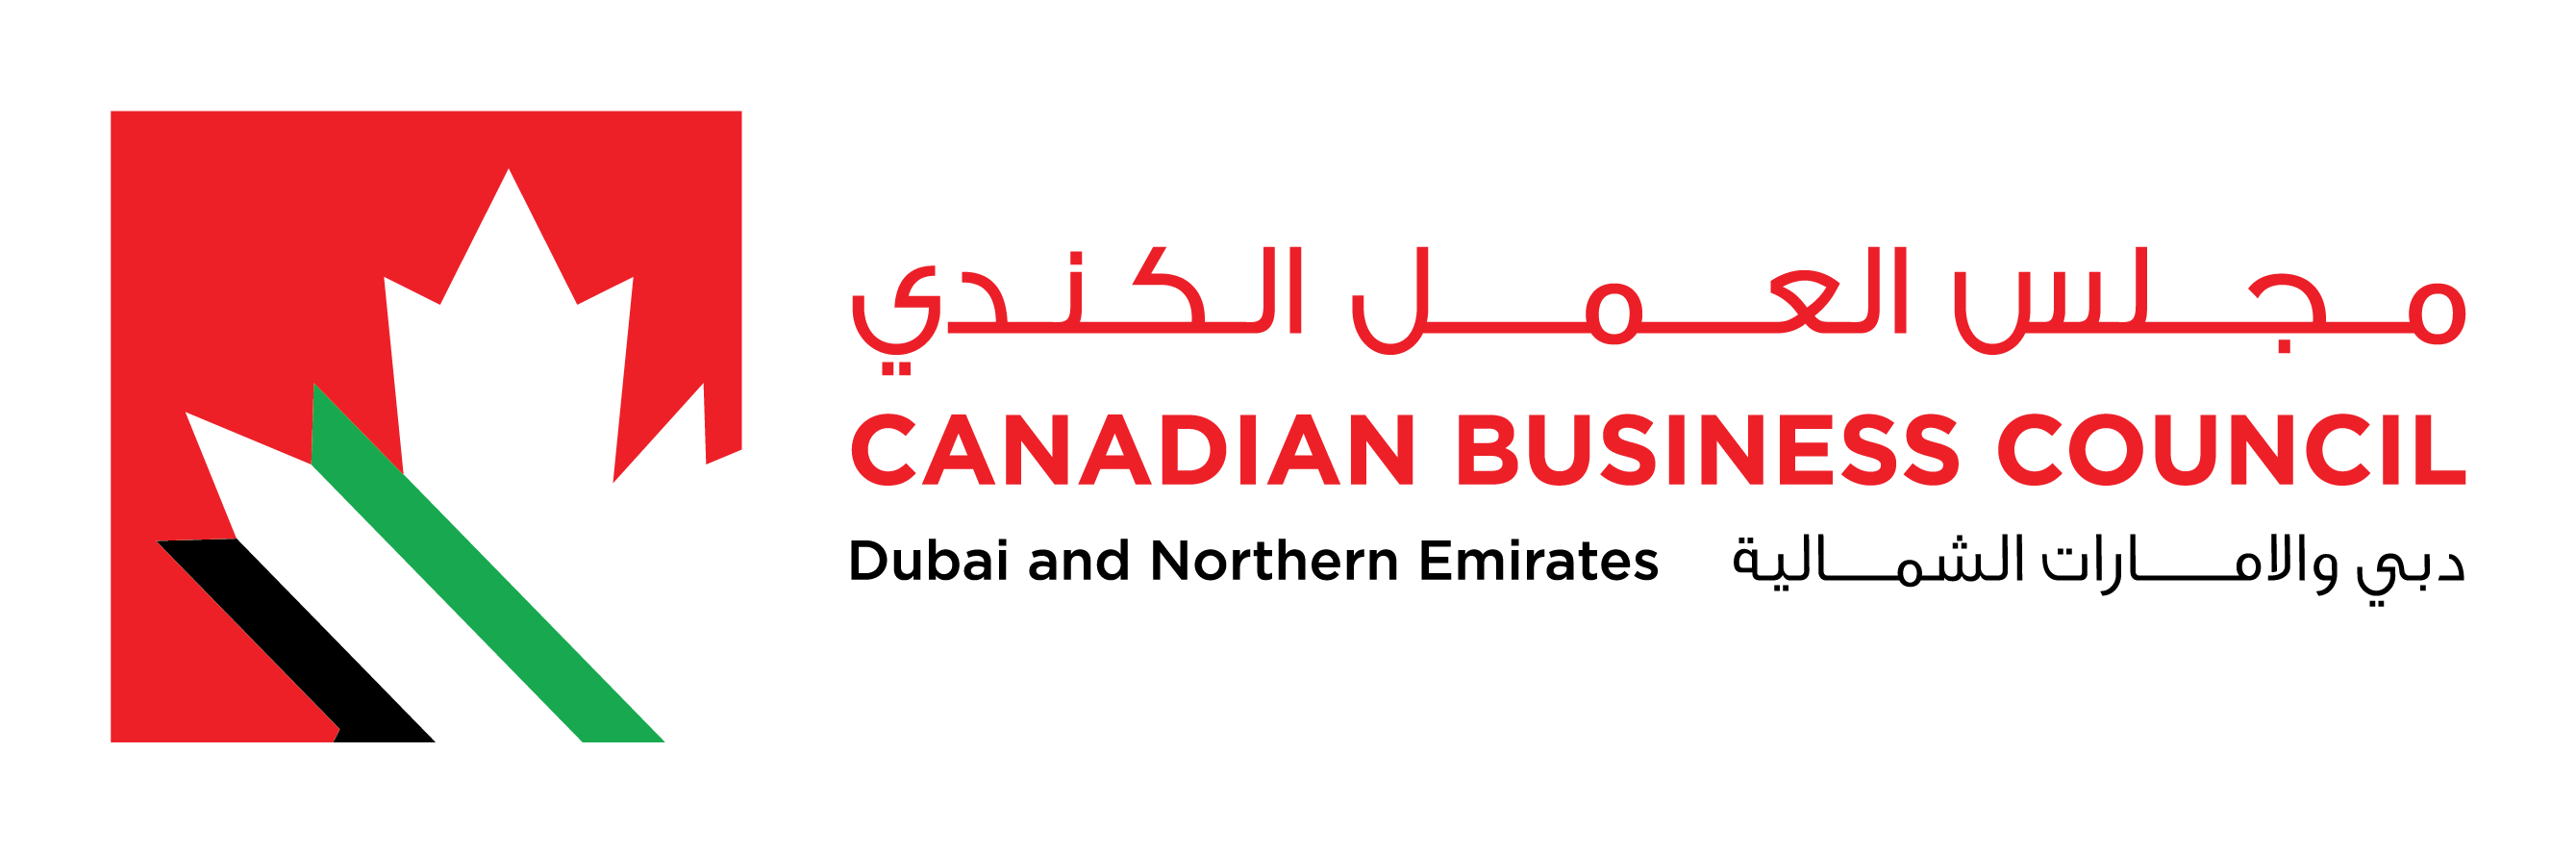 Canadian Business Council Dubai